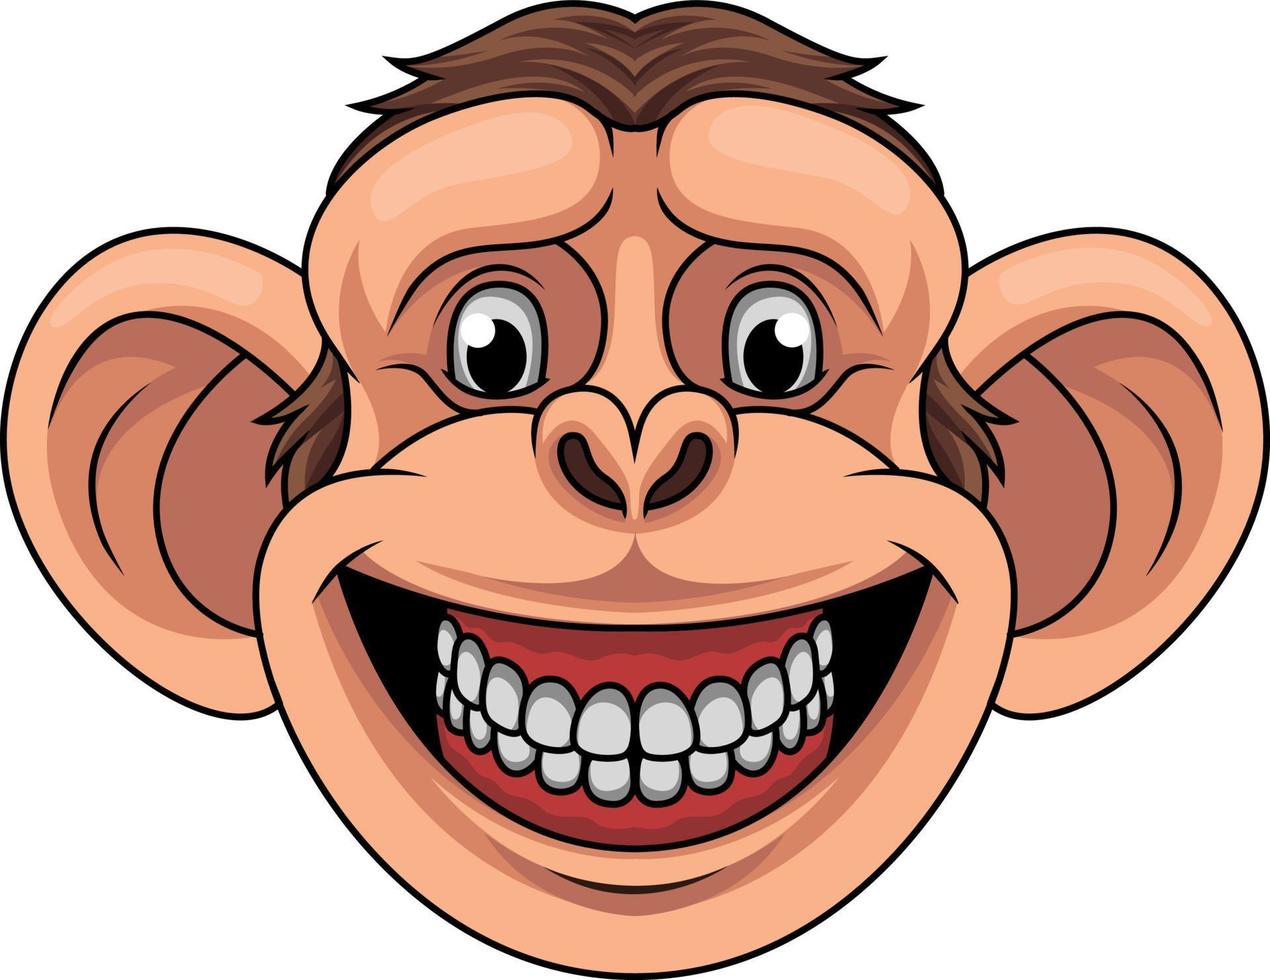 Cartoon monkey head mascot vector